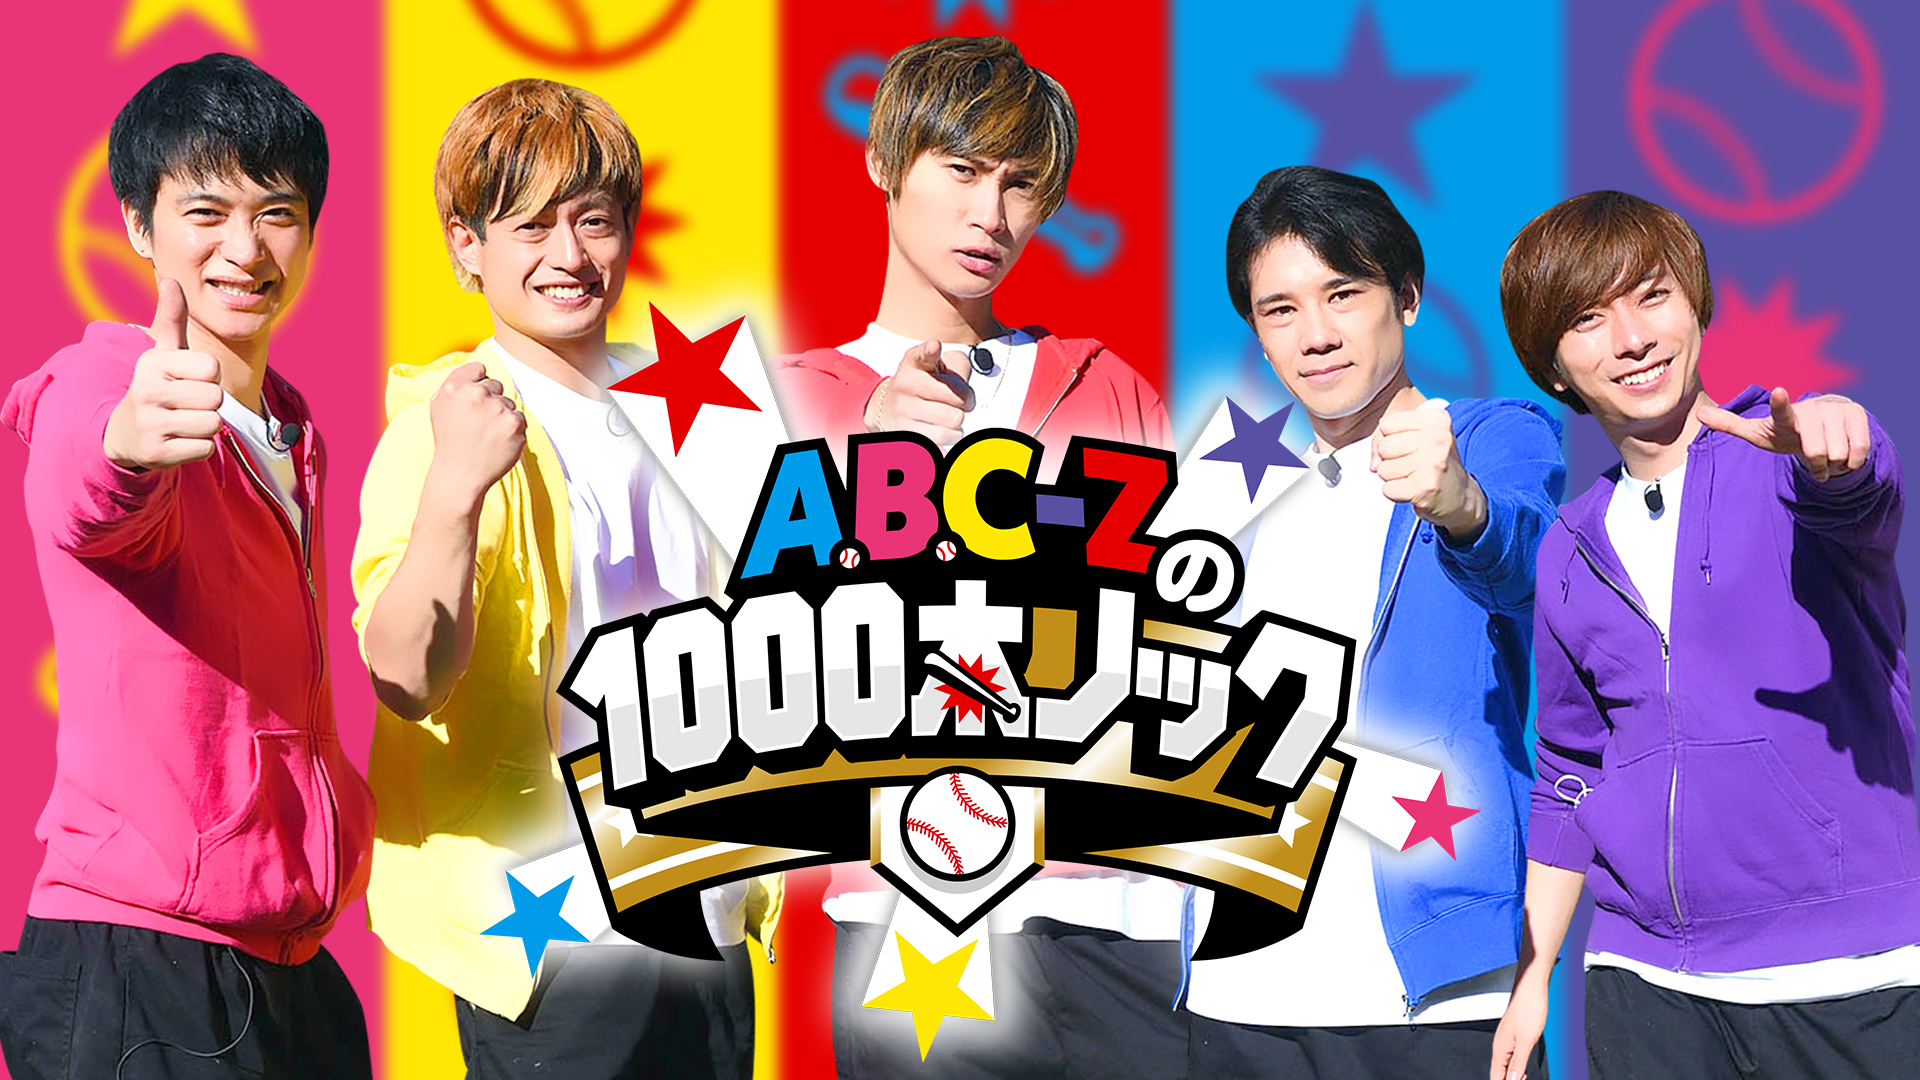 A.B.C-Zの1000本ノック(バラエティ / 2020) - 動画配信 | U-NEXT 31 ...